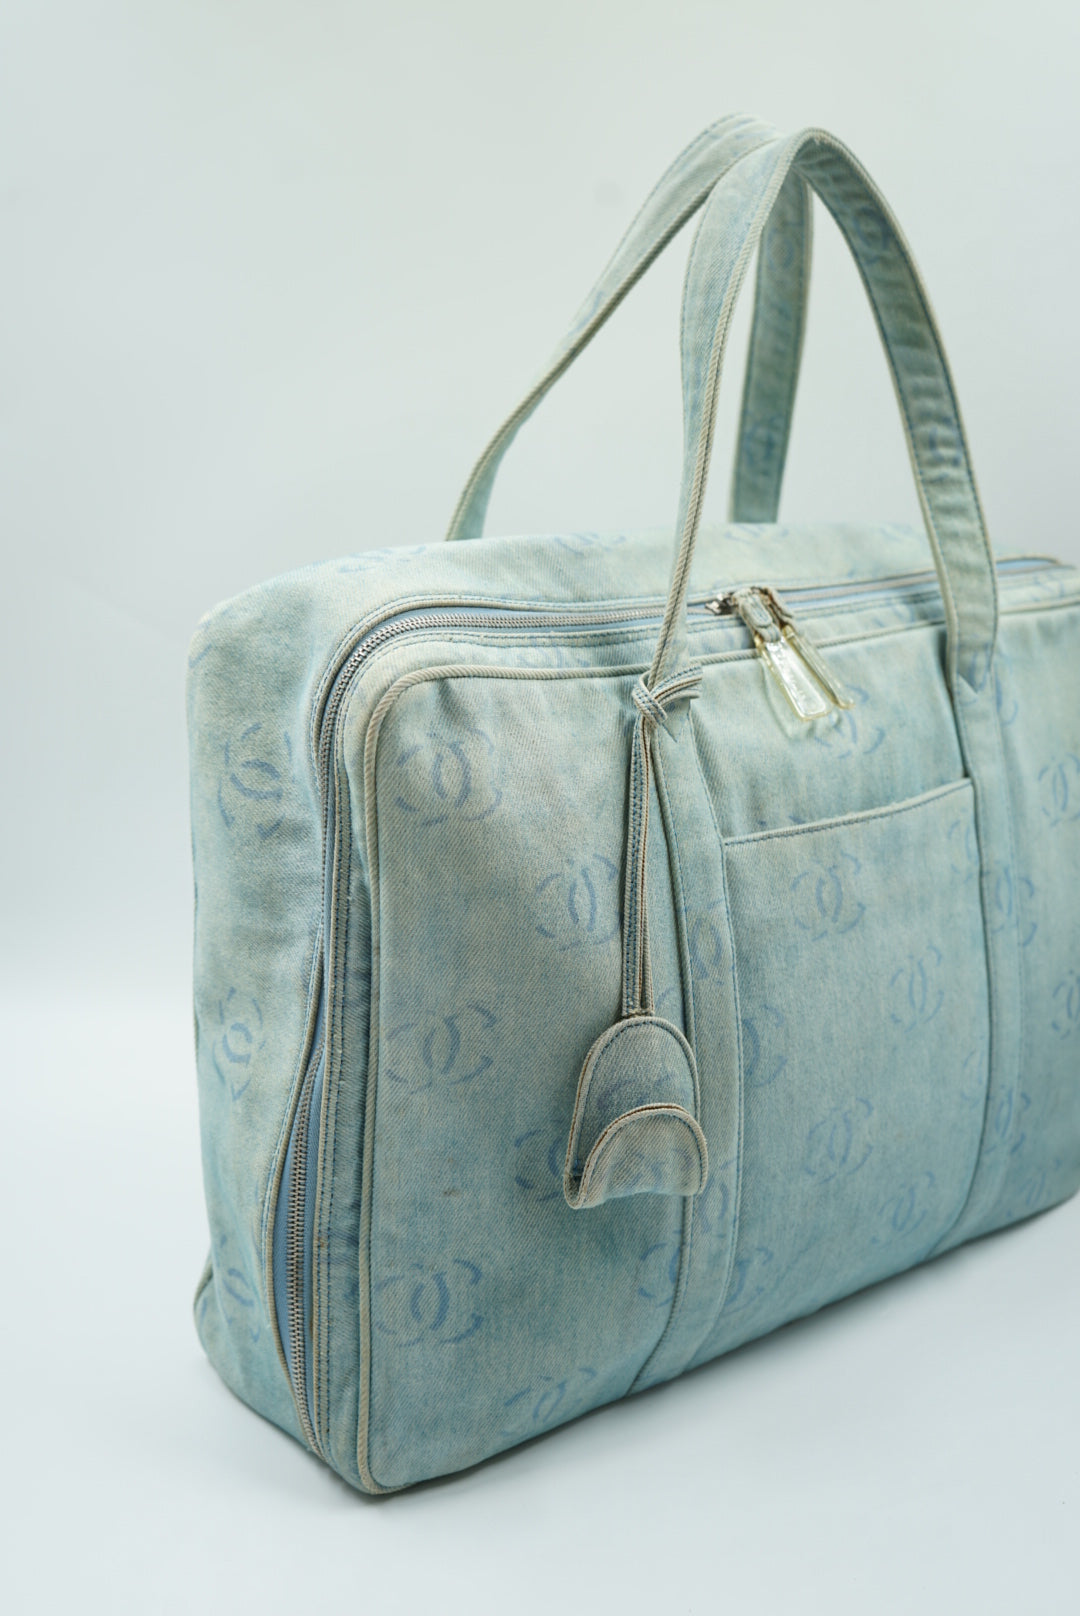 Chanel denim suitcase/ weekend bag